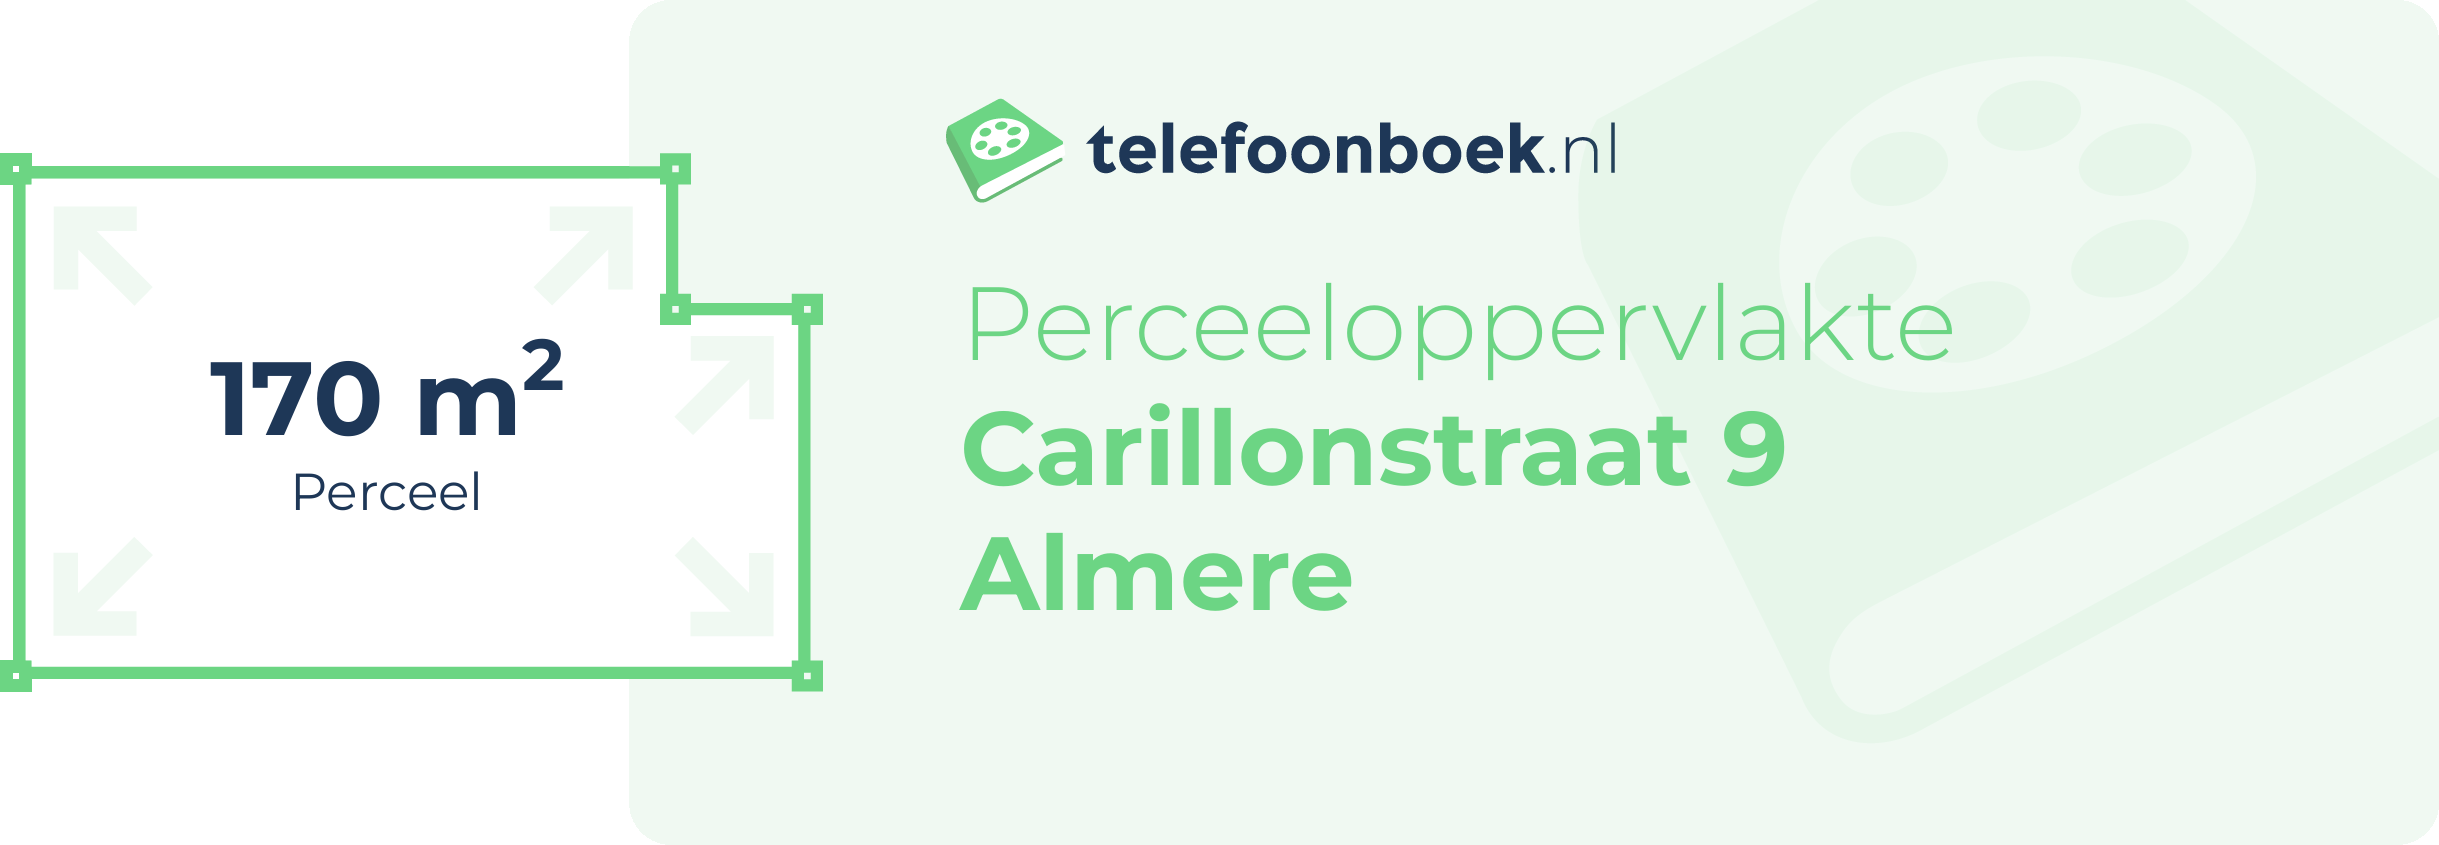 Perceeloppervlakte Carillonstraat 9 Almere